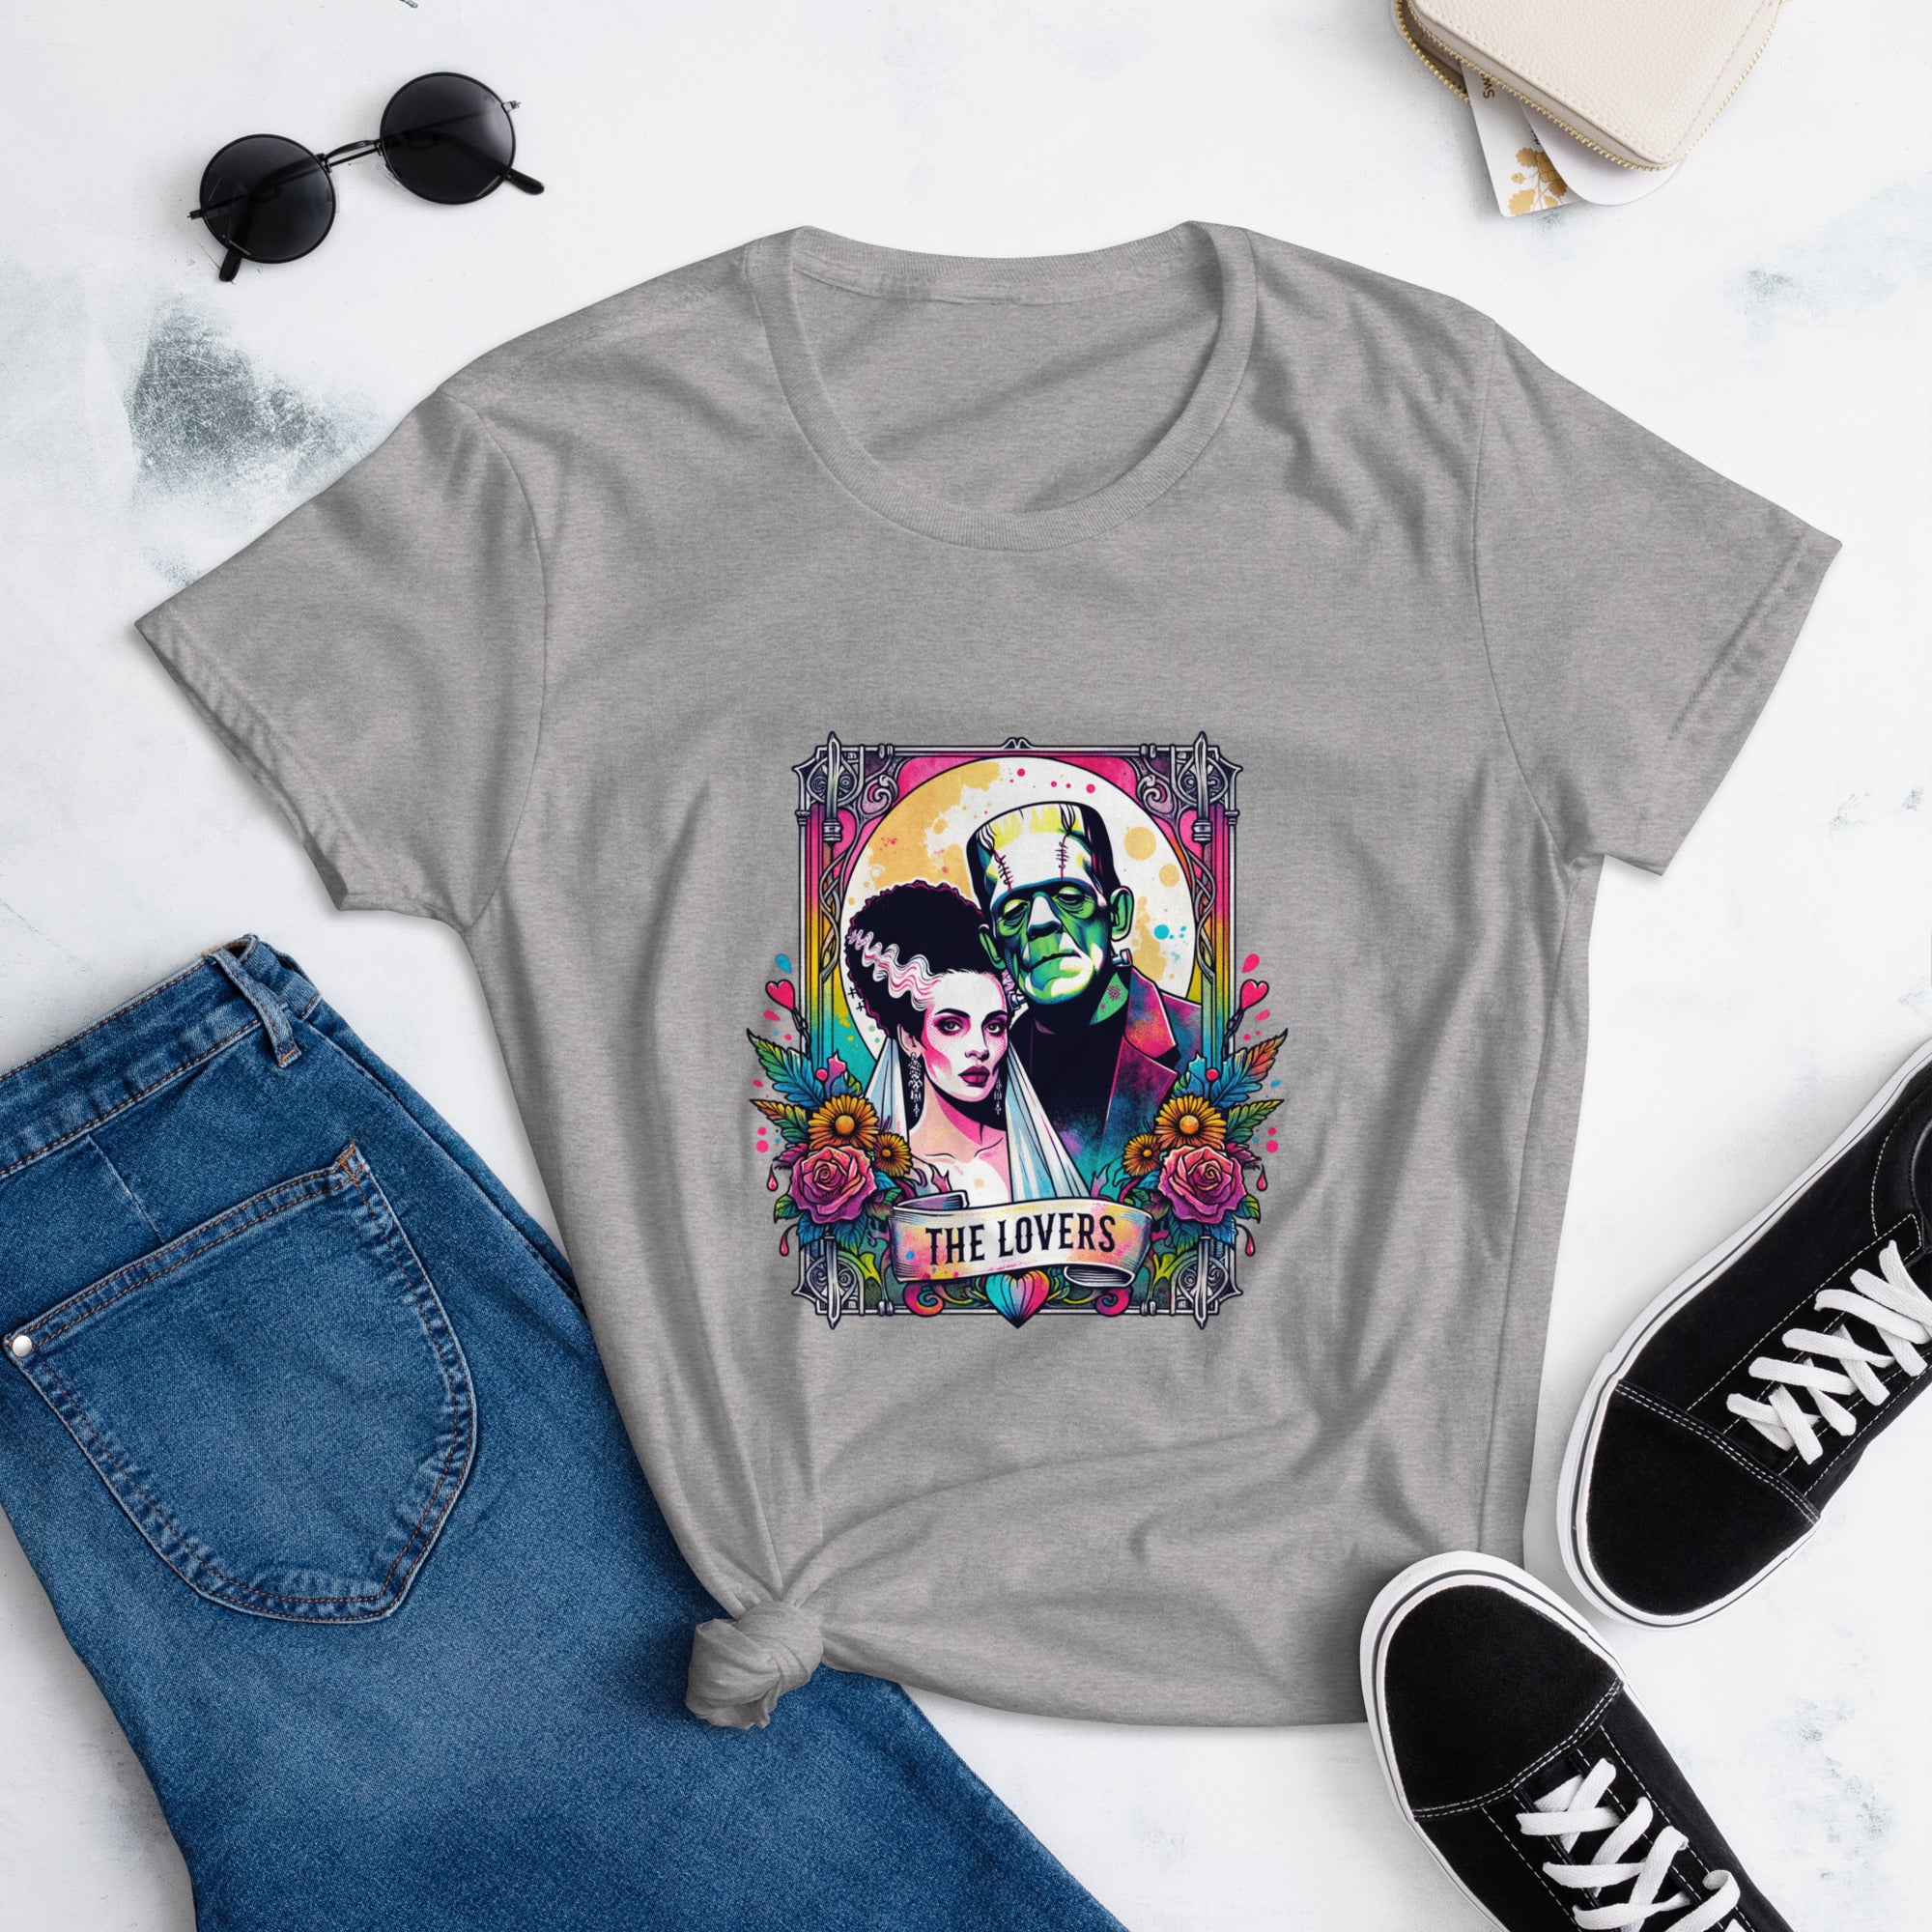 The Bride of Frankenstein Halloween T Shirt for Women